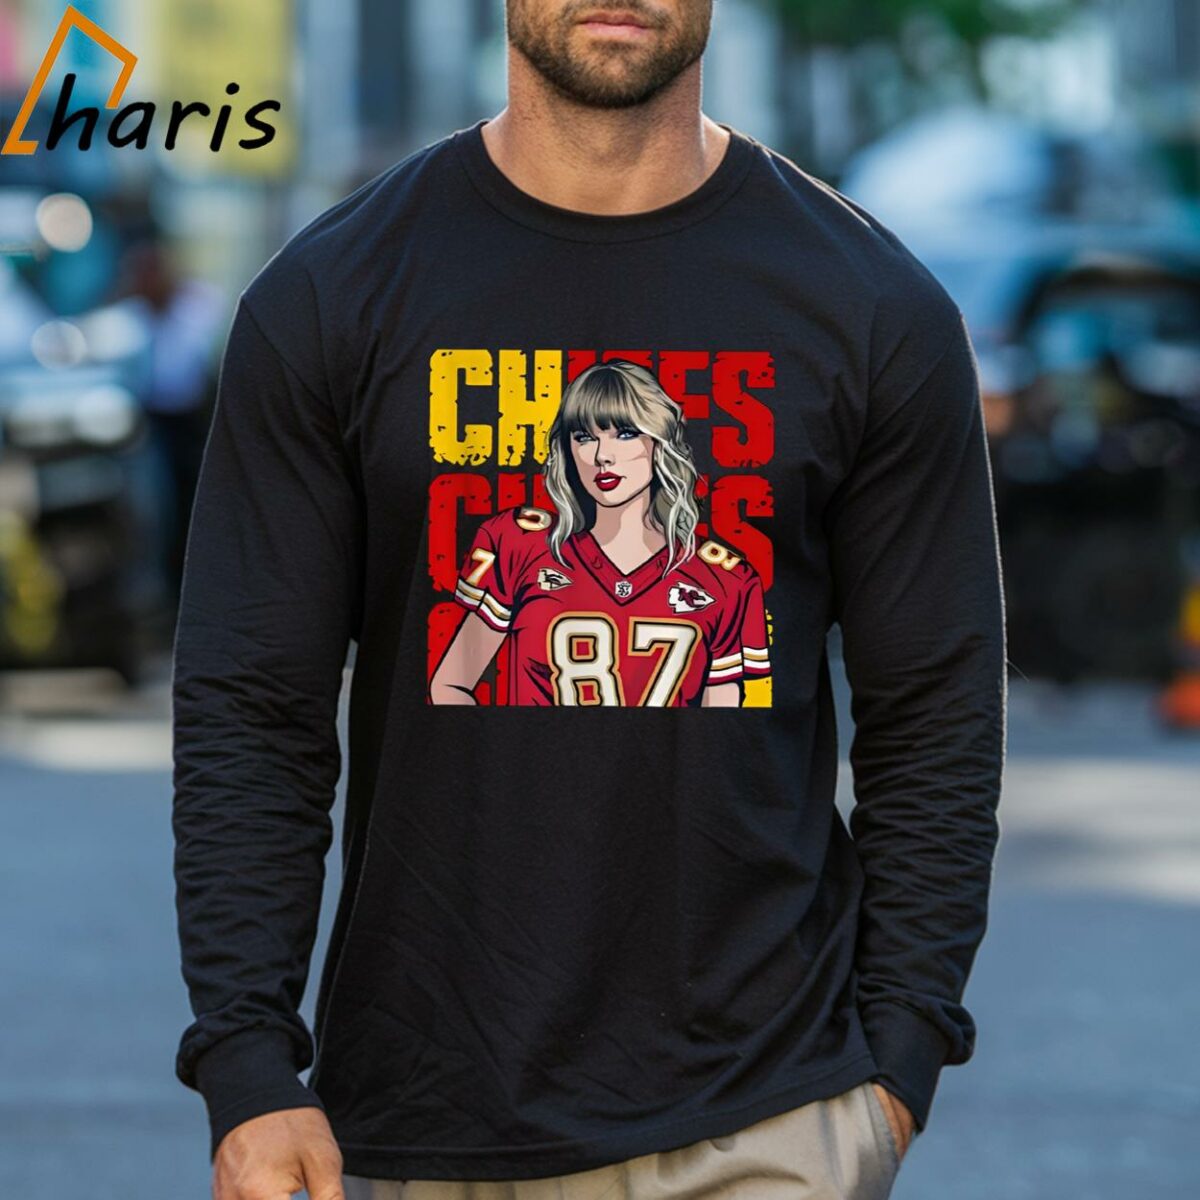 Taylor Hearts Kelce in Chiefs Shirt 3 Long sleeve shirt